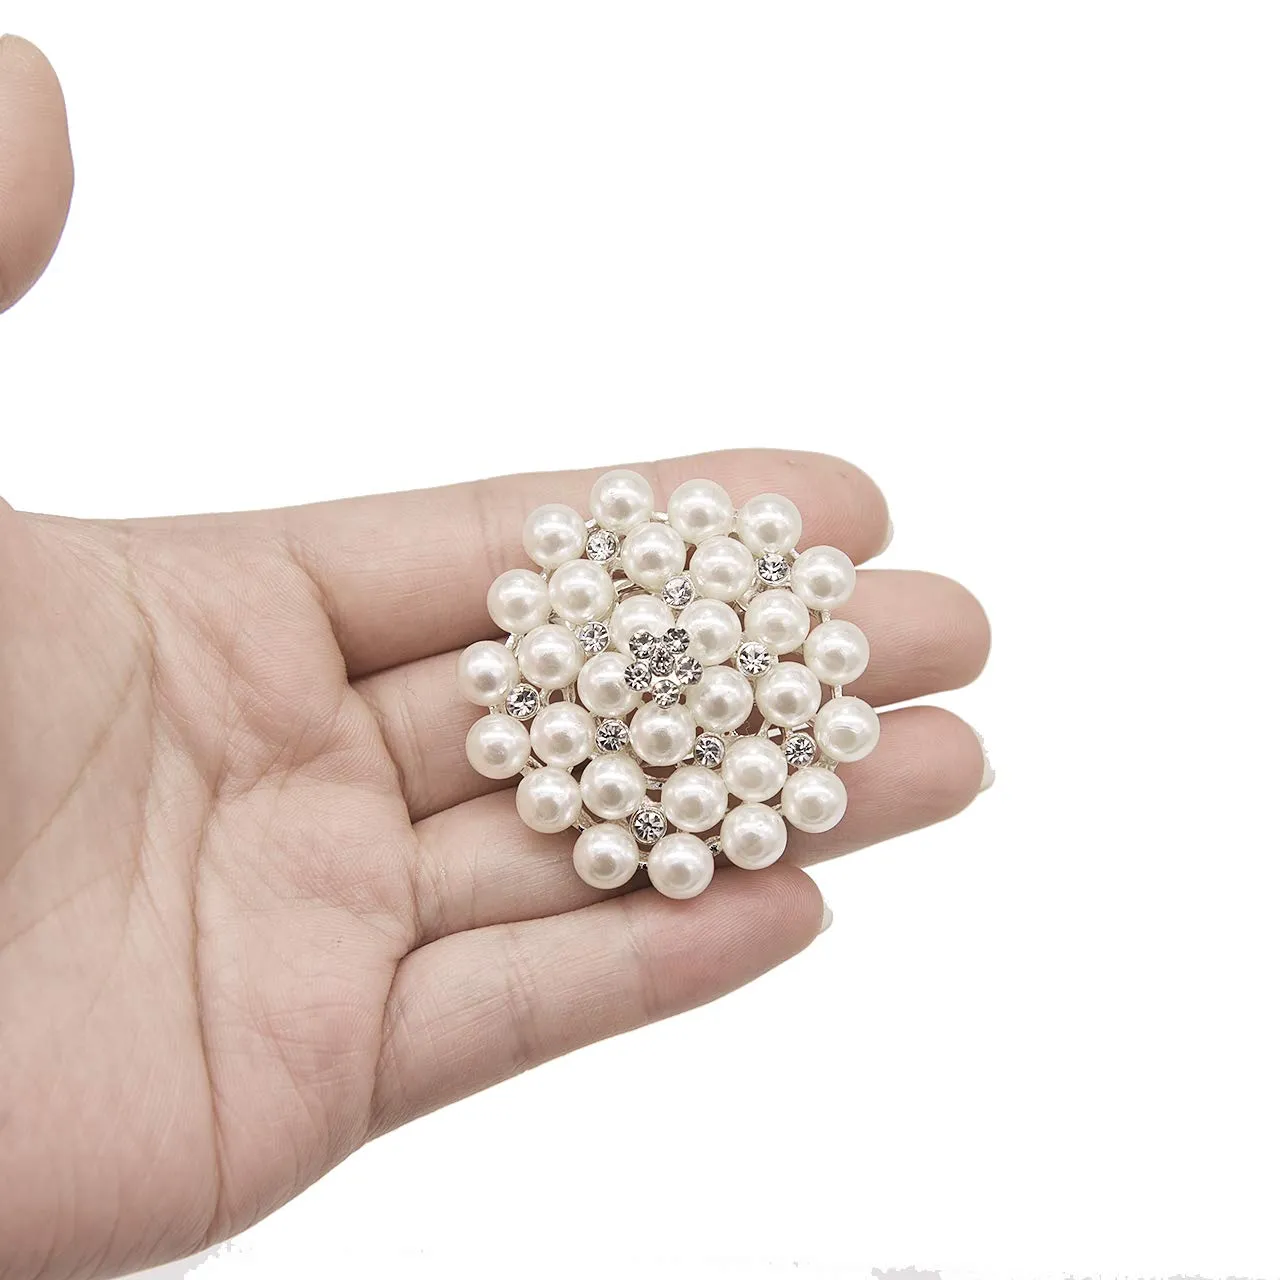 silvertone rhinestone brooches big pearl crystal wedding bouquet kit set wholesale lot set pins fashion women girl flower clear brooch